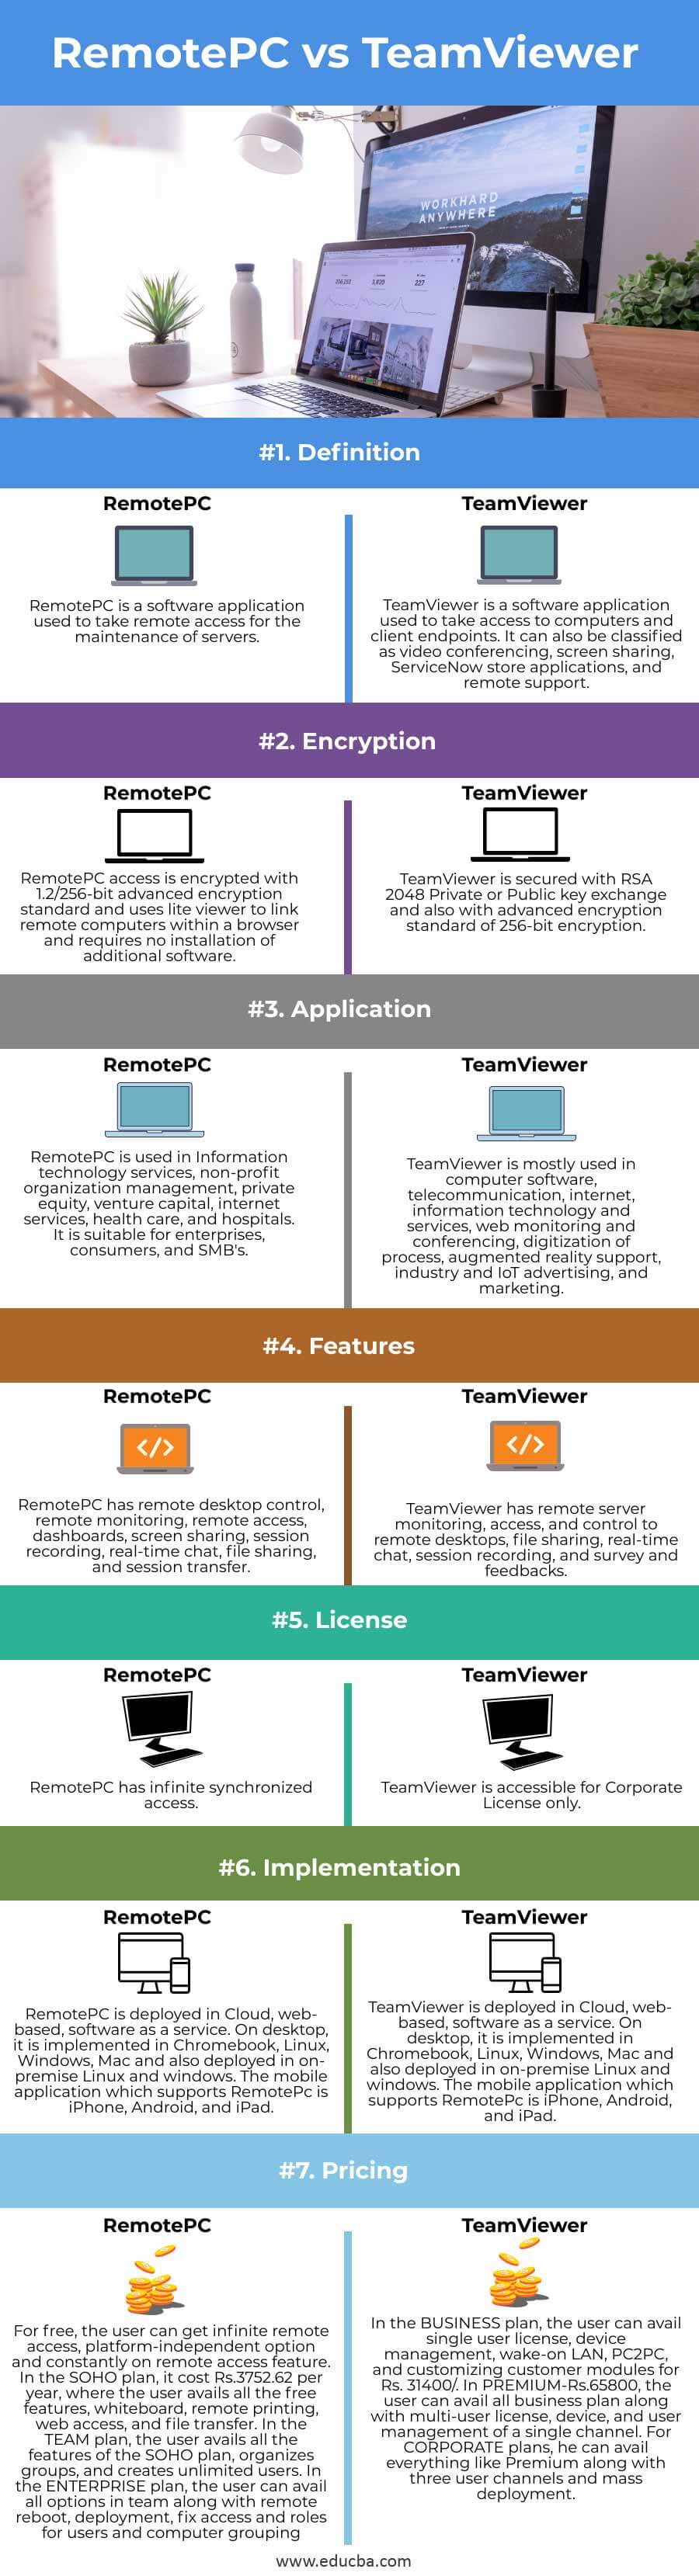 RemotePC-vs-TeamViewer-info